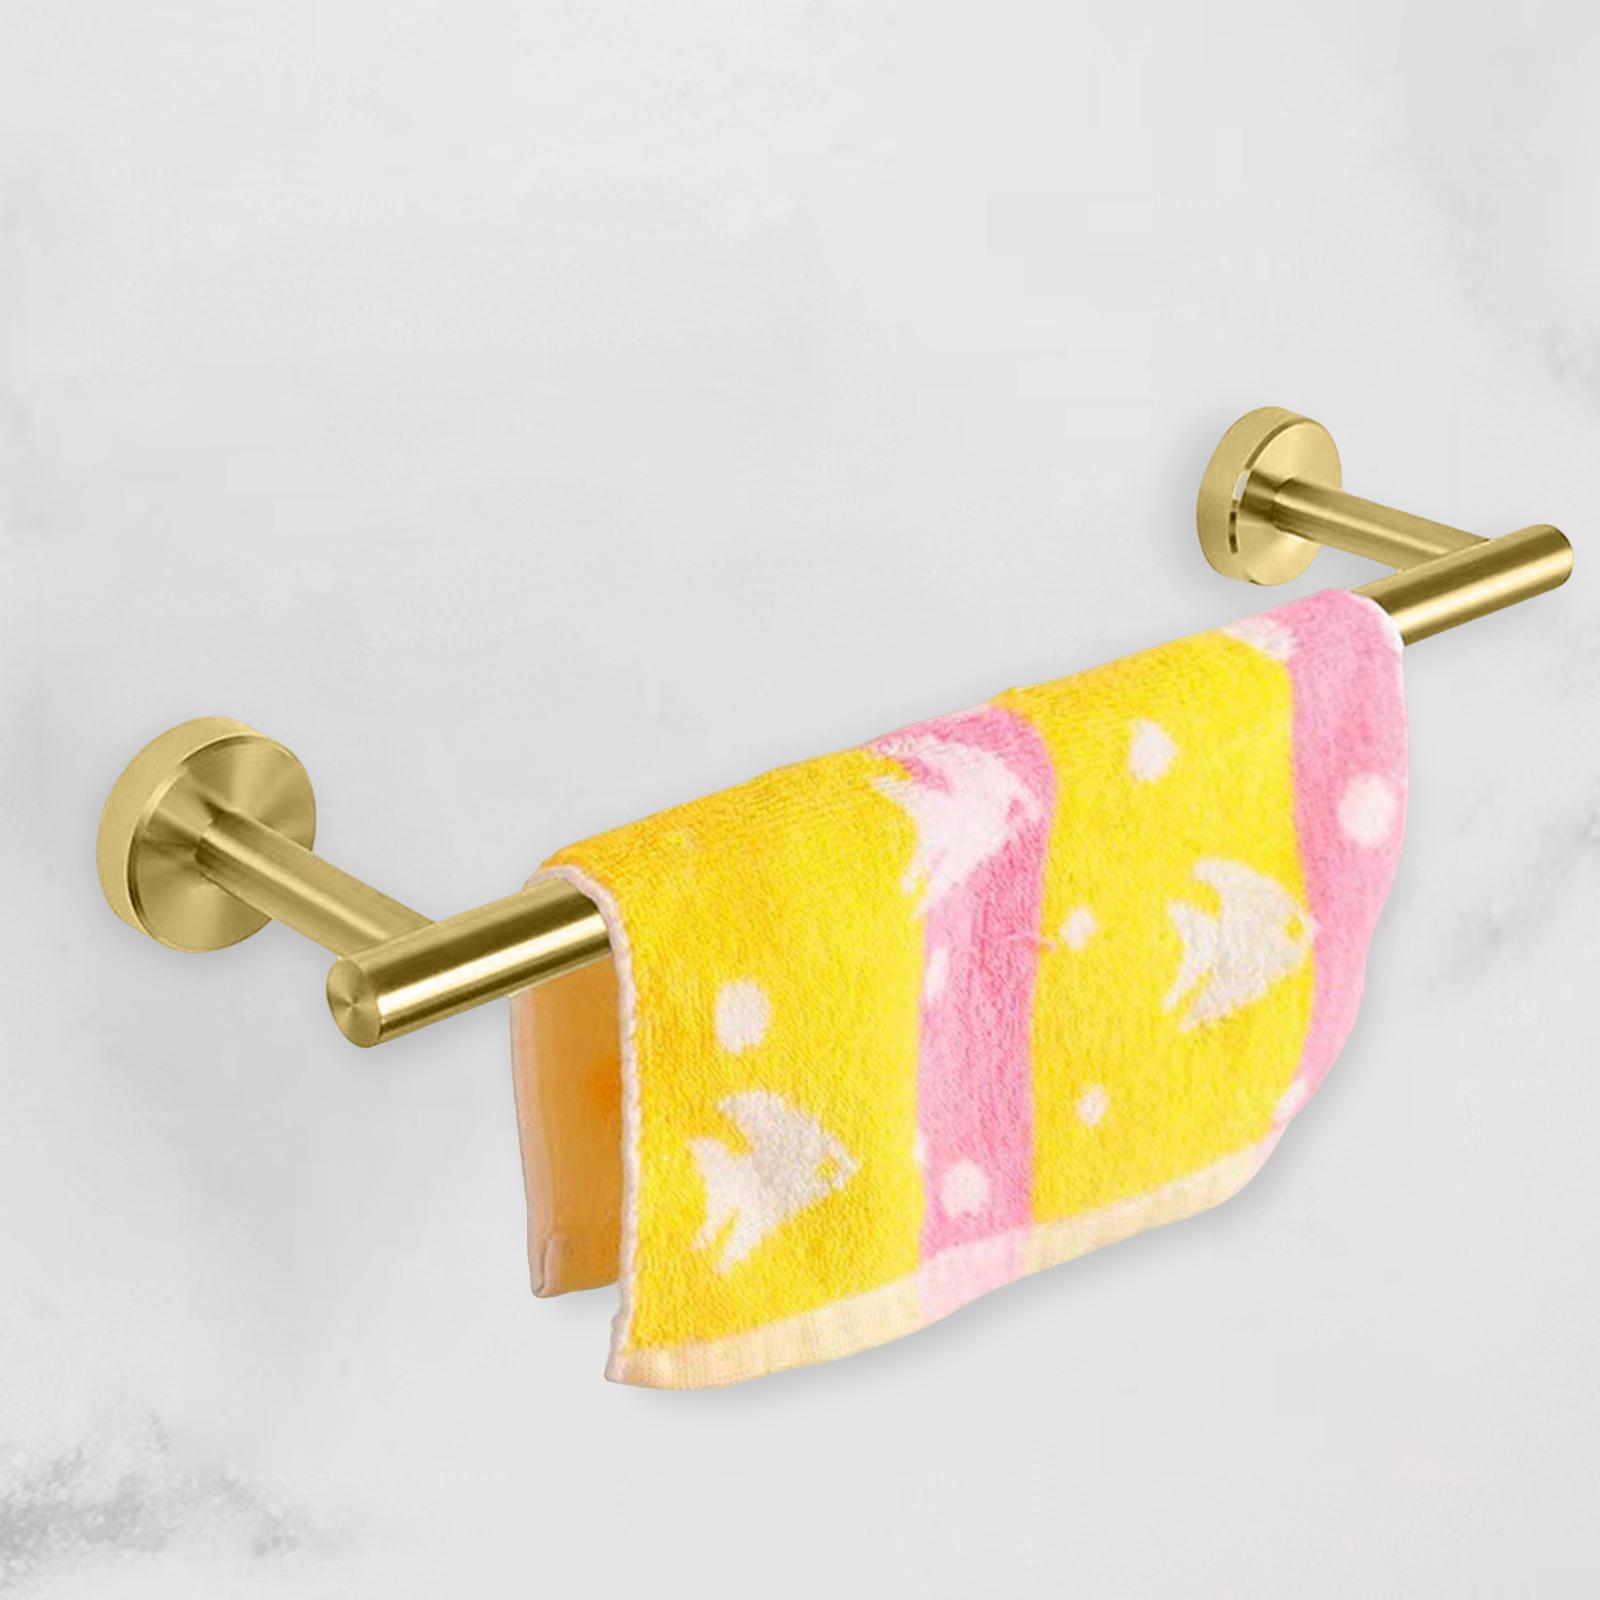 3 Pieces Bathroom Hardware Accessories Set Towel Hook 16" Towel Bar Gold